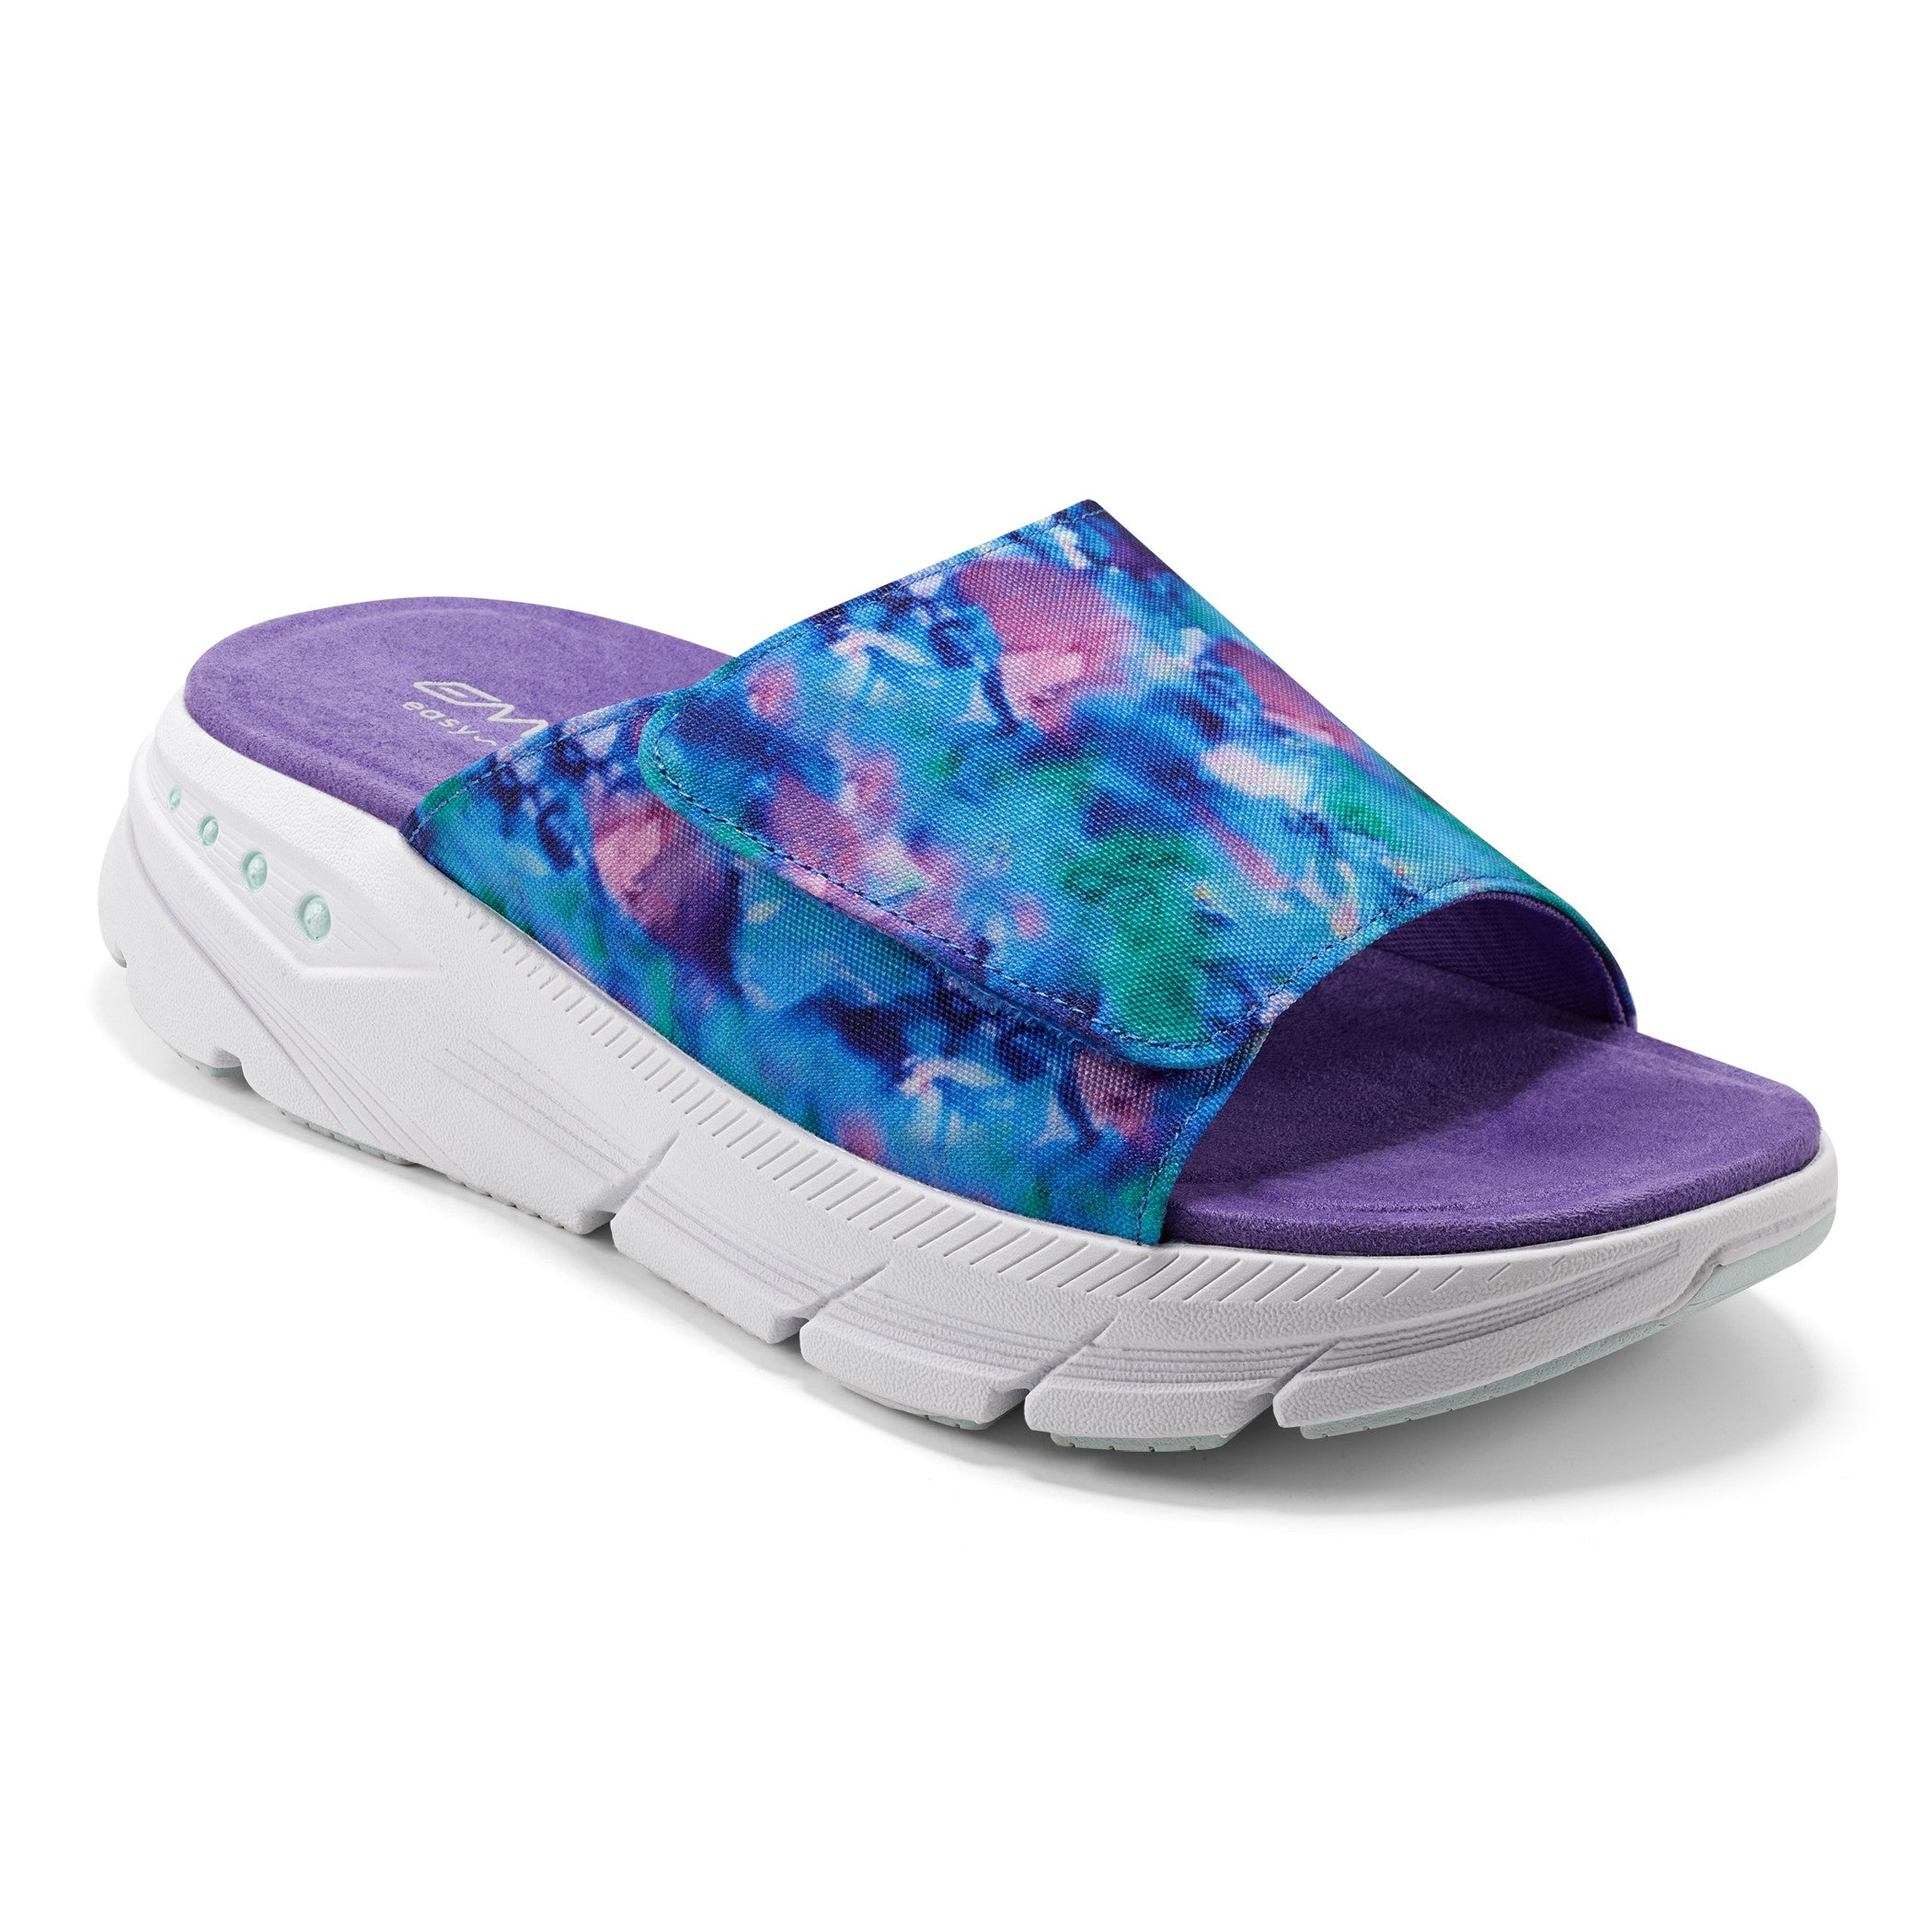 Mahya Slip On Walking Sandals